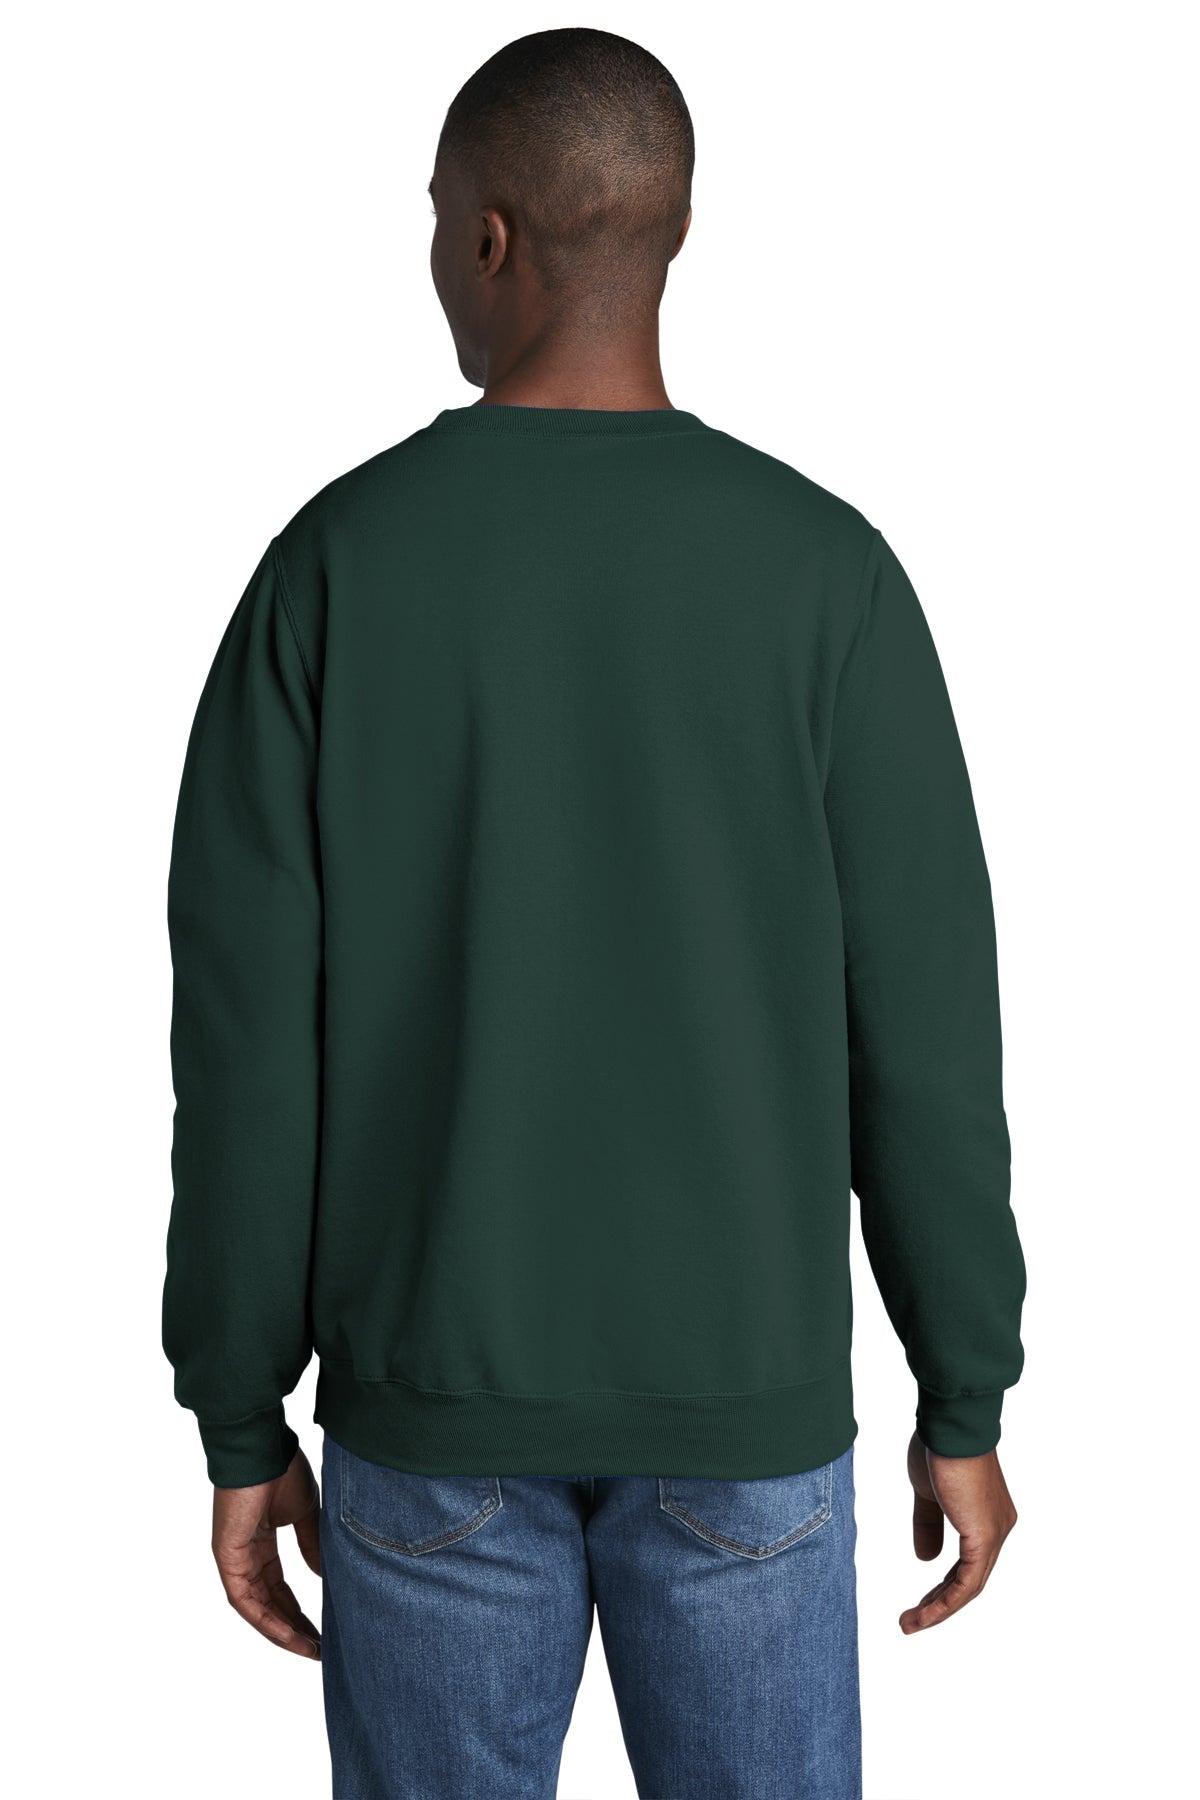 port & company_pc78 _dark green_company_logo_sweatshirts